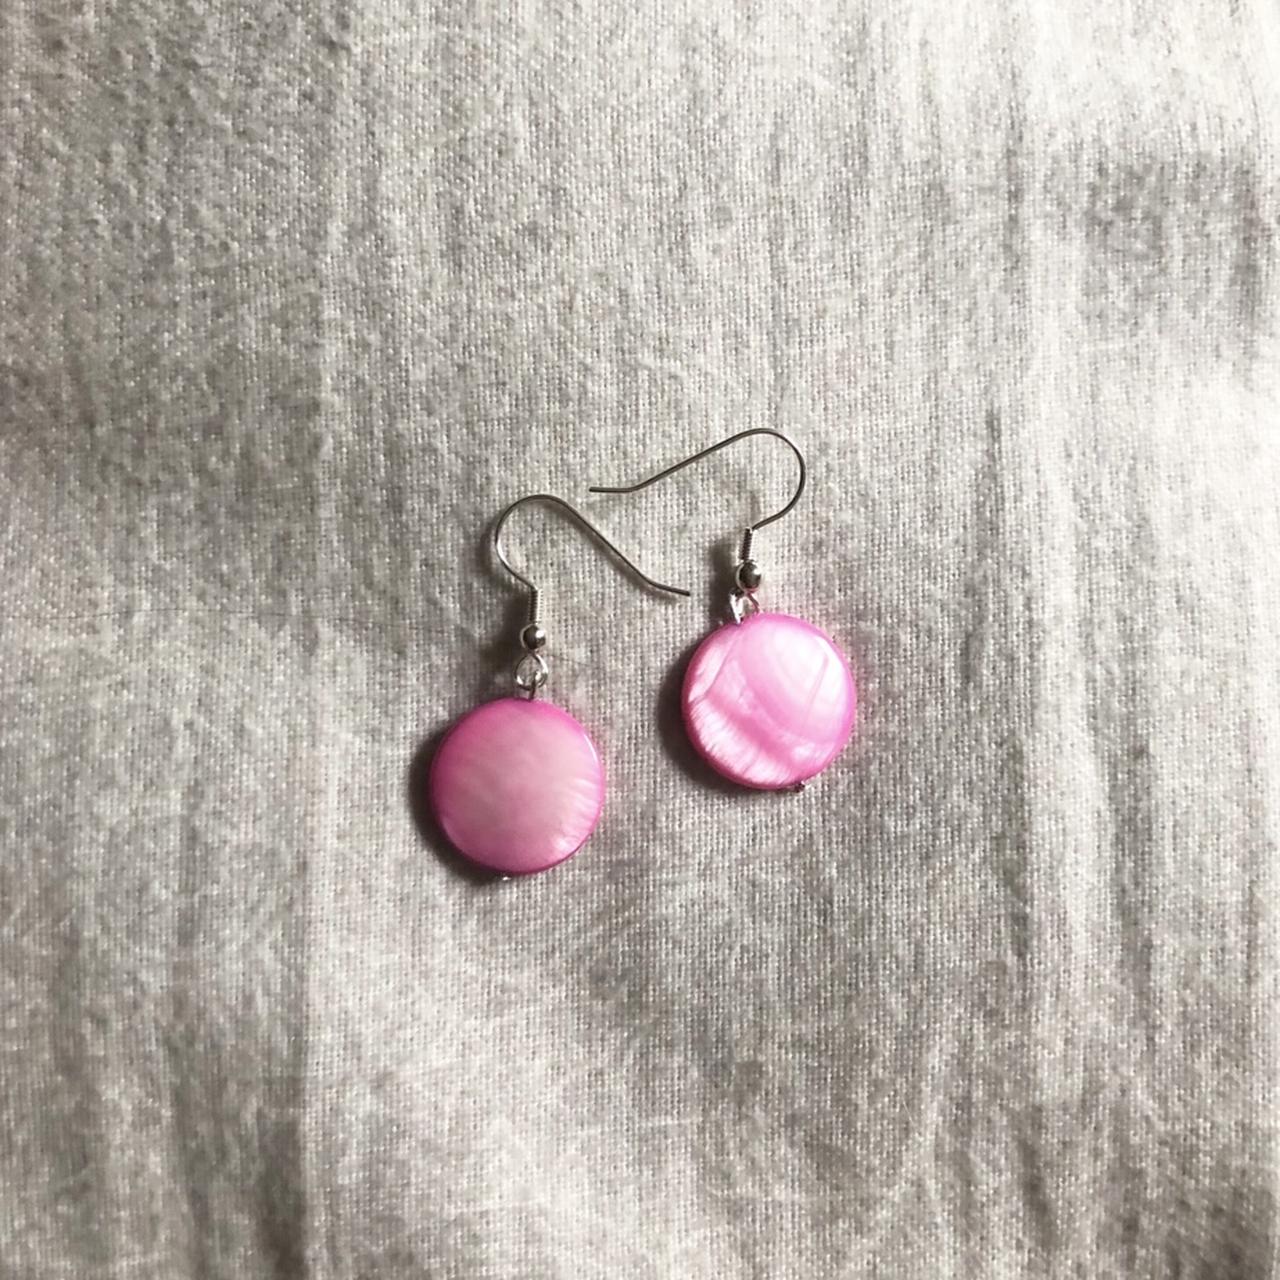 Product Image 2 - Pink Circle Dangle Earrings 🌸🌺🌷
:Free